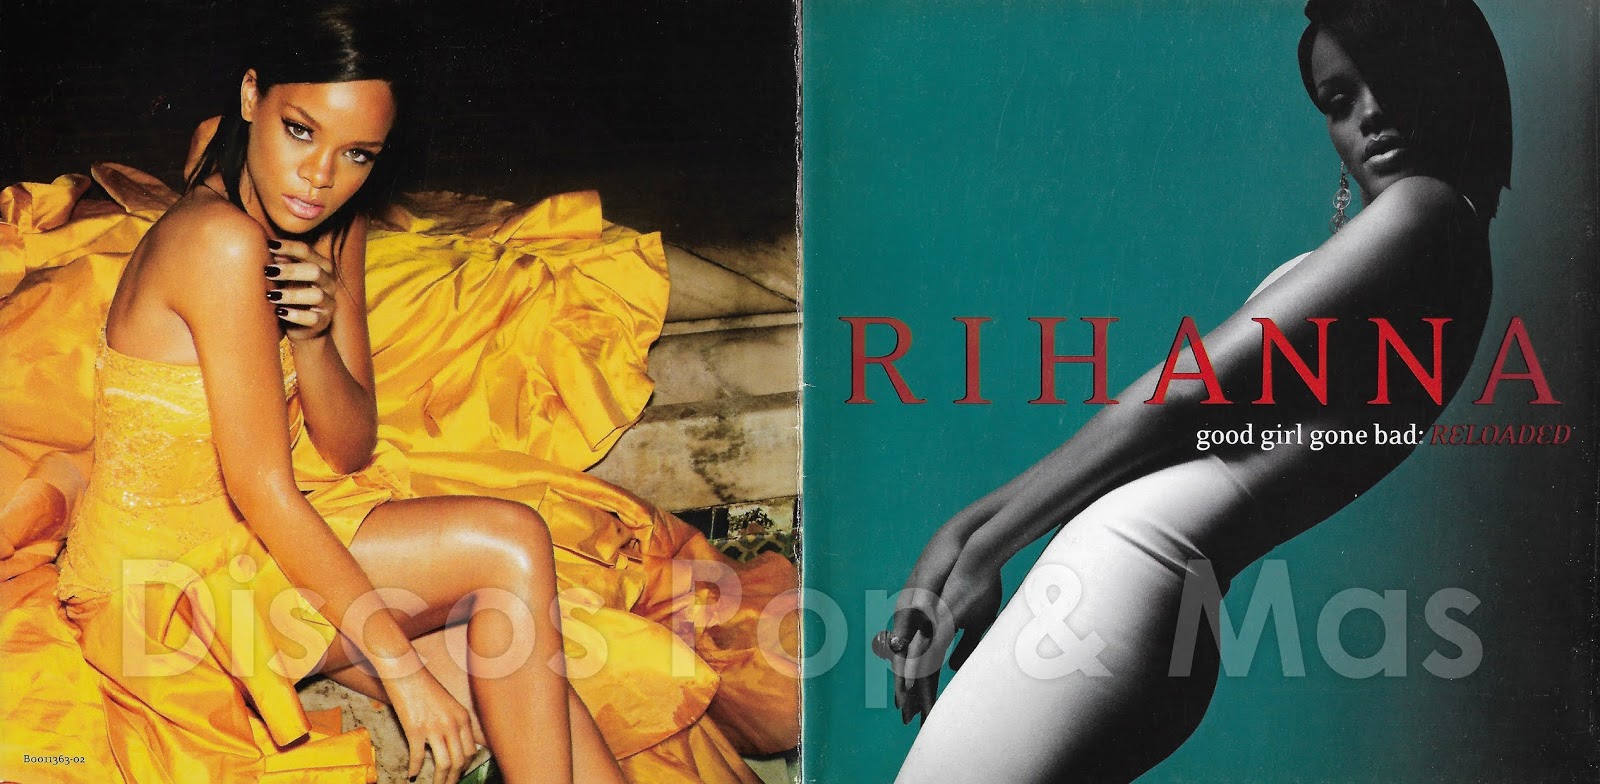 Good girl goes bad. Good girl gone Bad: Reloaded Рианна. Rihanna 2007 good girl gone Bad. Rihanna good girl gone Bad альбом. Рианна альбомы.